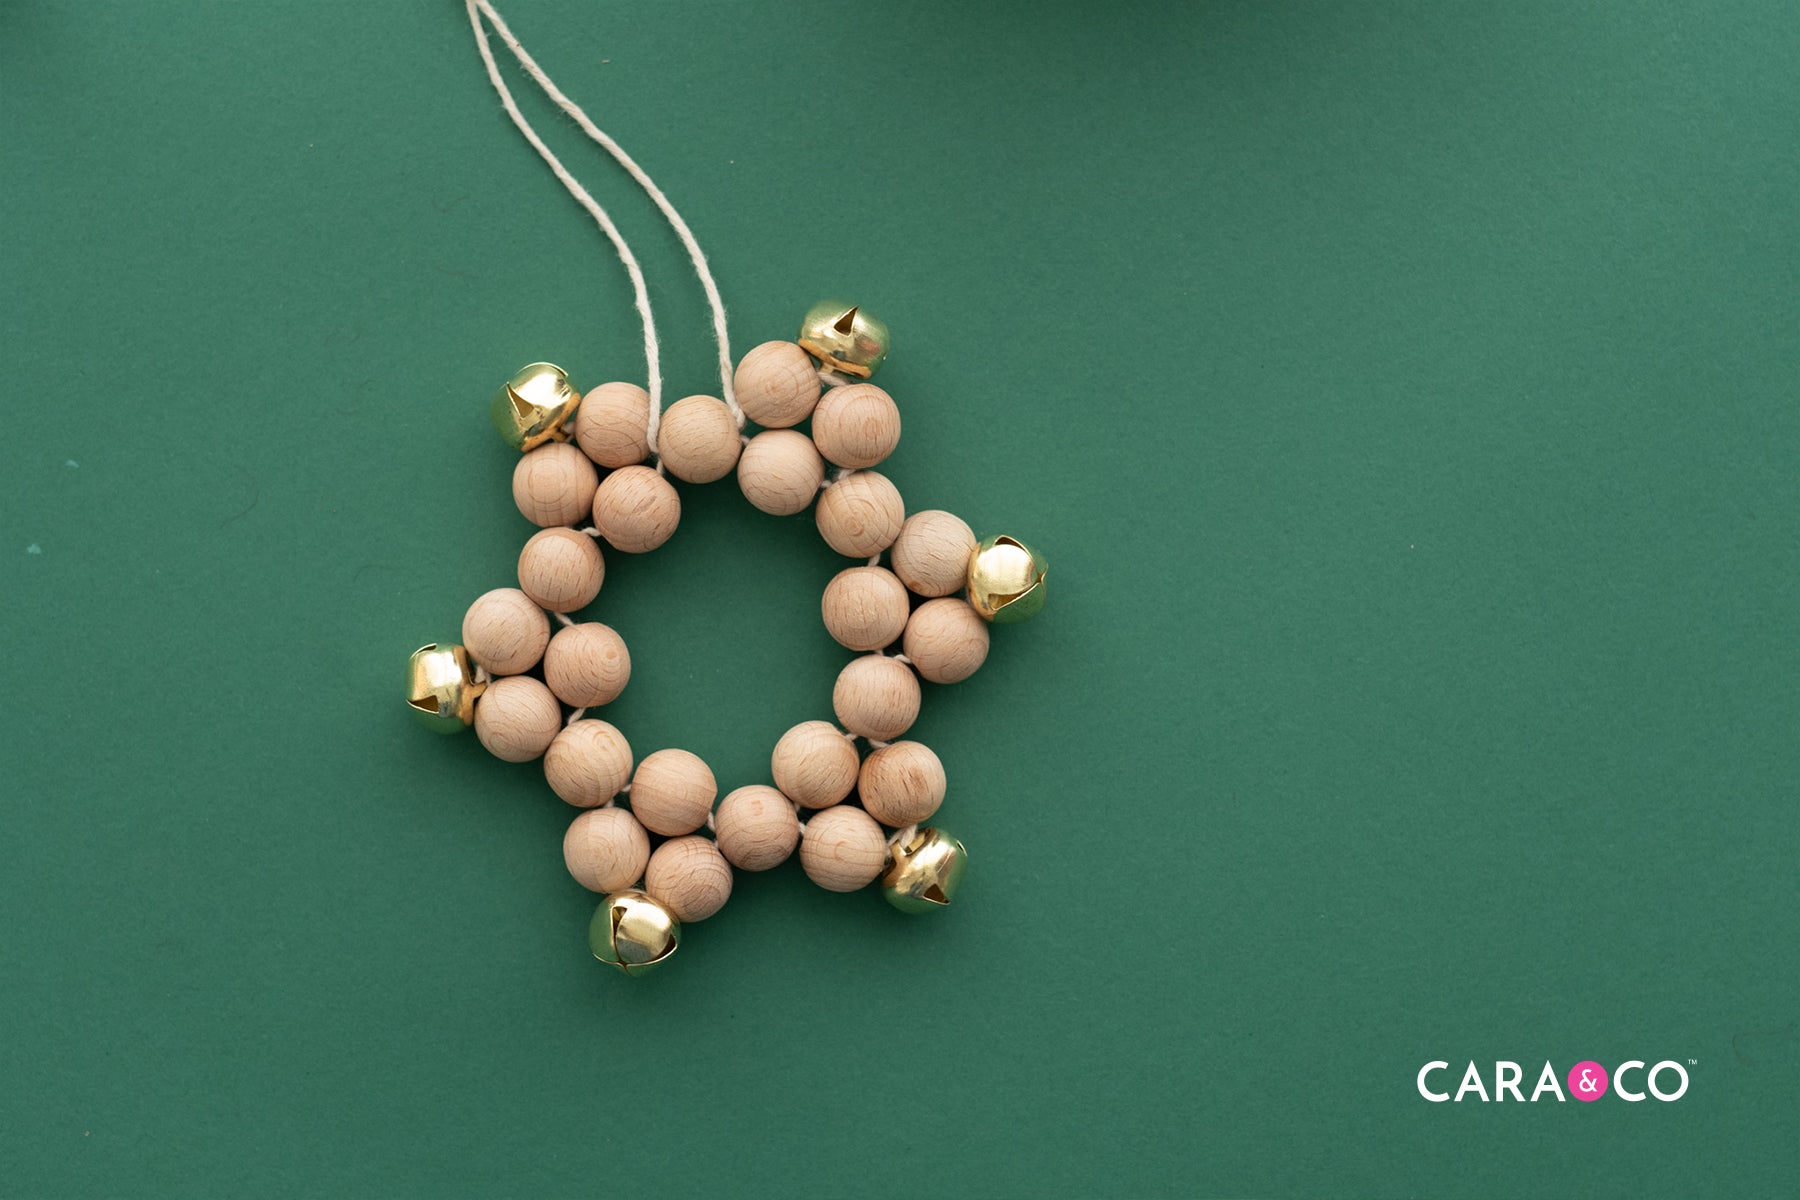 Wooden Star Christmas Ornament - Cara & Co Tutorials